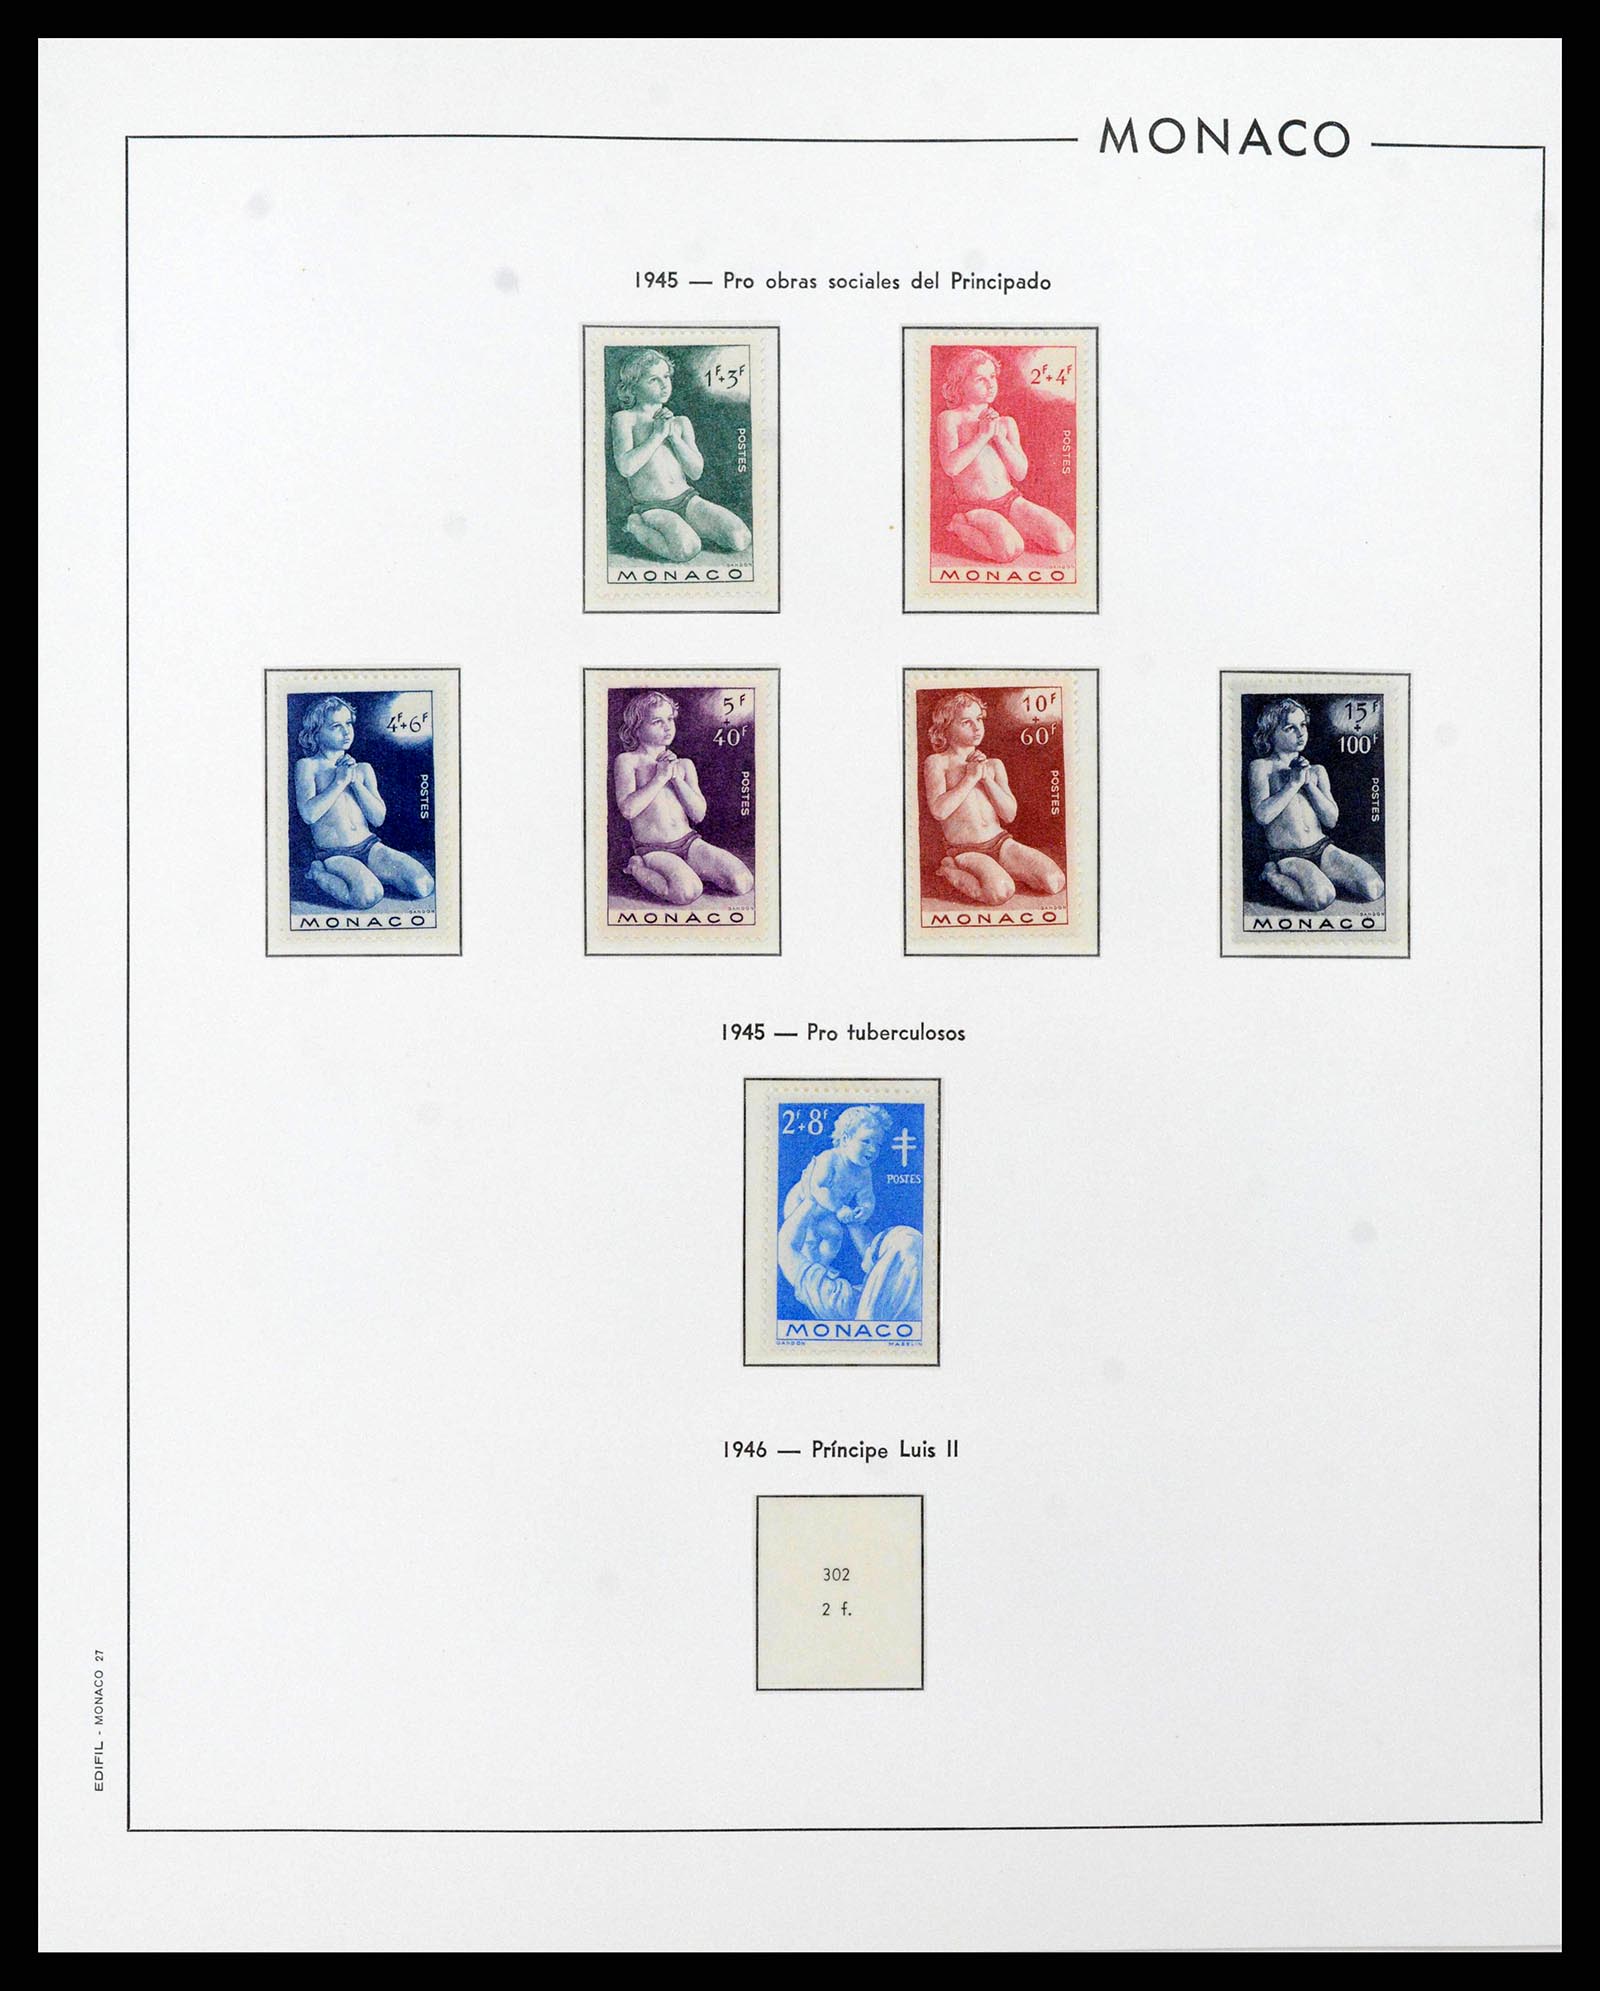 38283 0026 - Stamp collection 38283 Monaco 1885-1989.